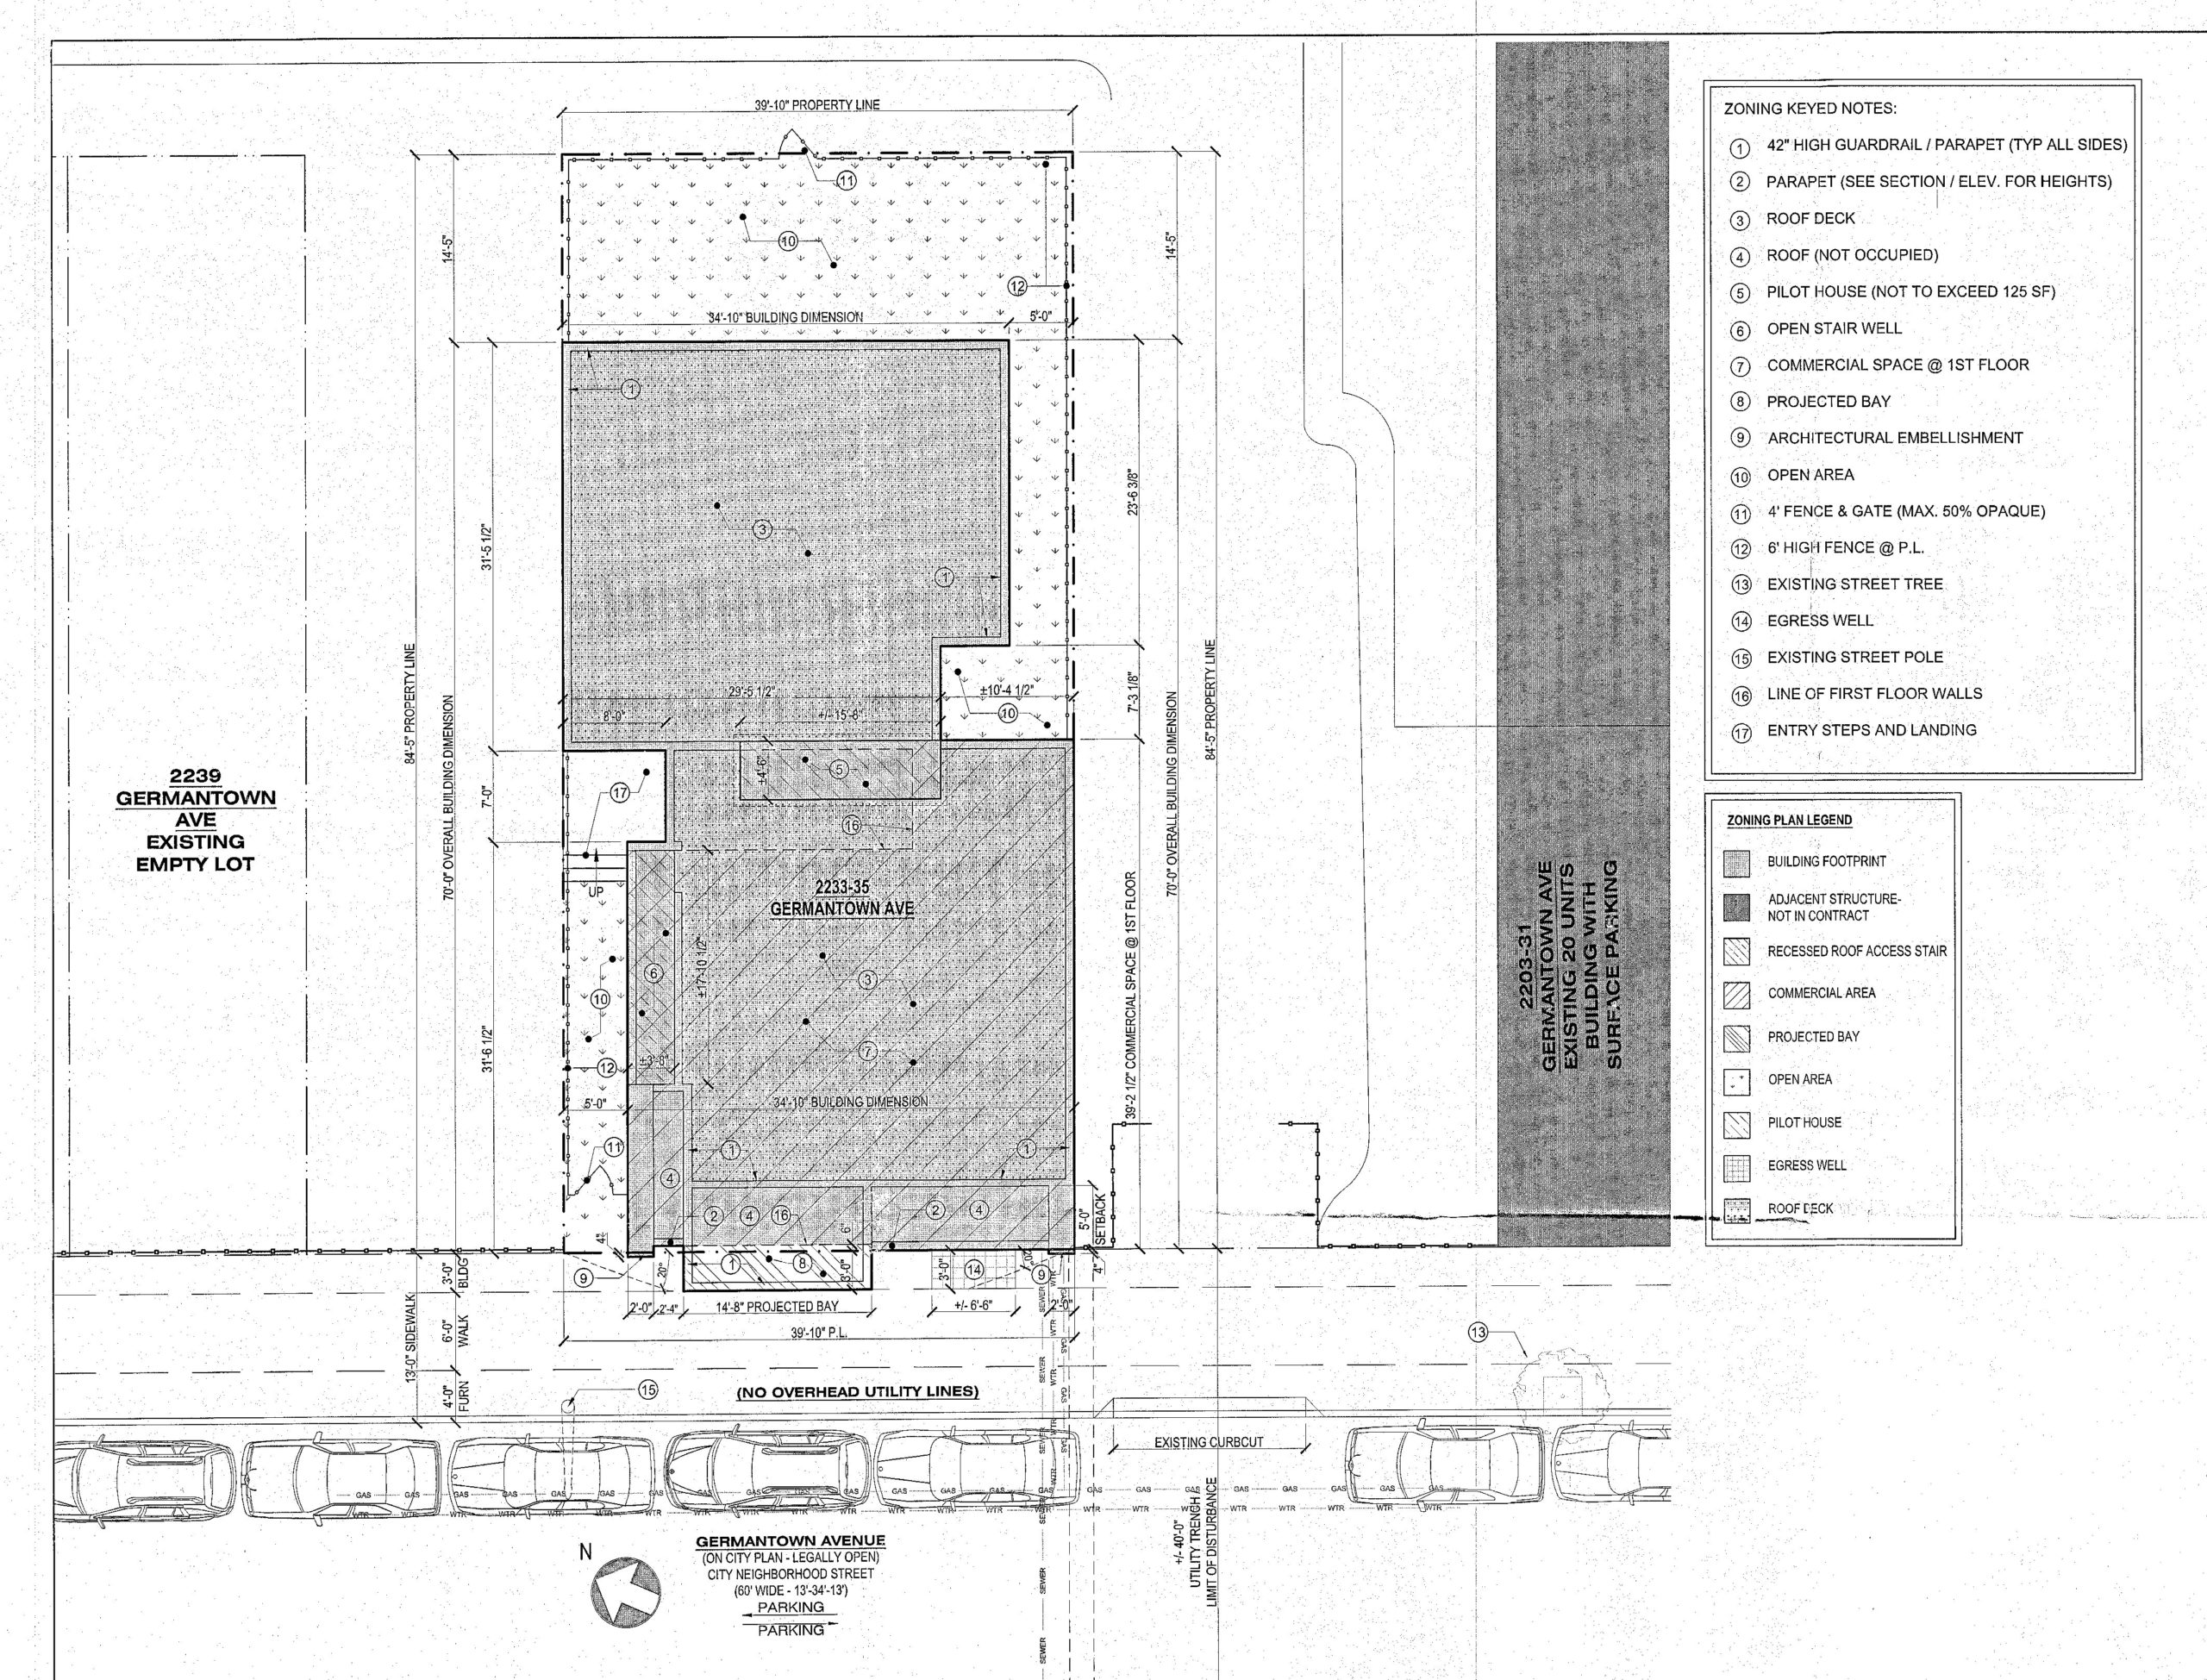 2233-35 Germantown Avenue. Site plan. Credit: HDO Architecture via the City of Philadelphia